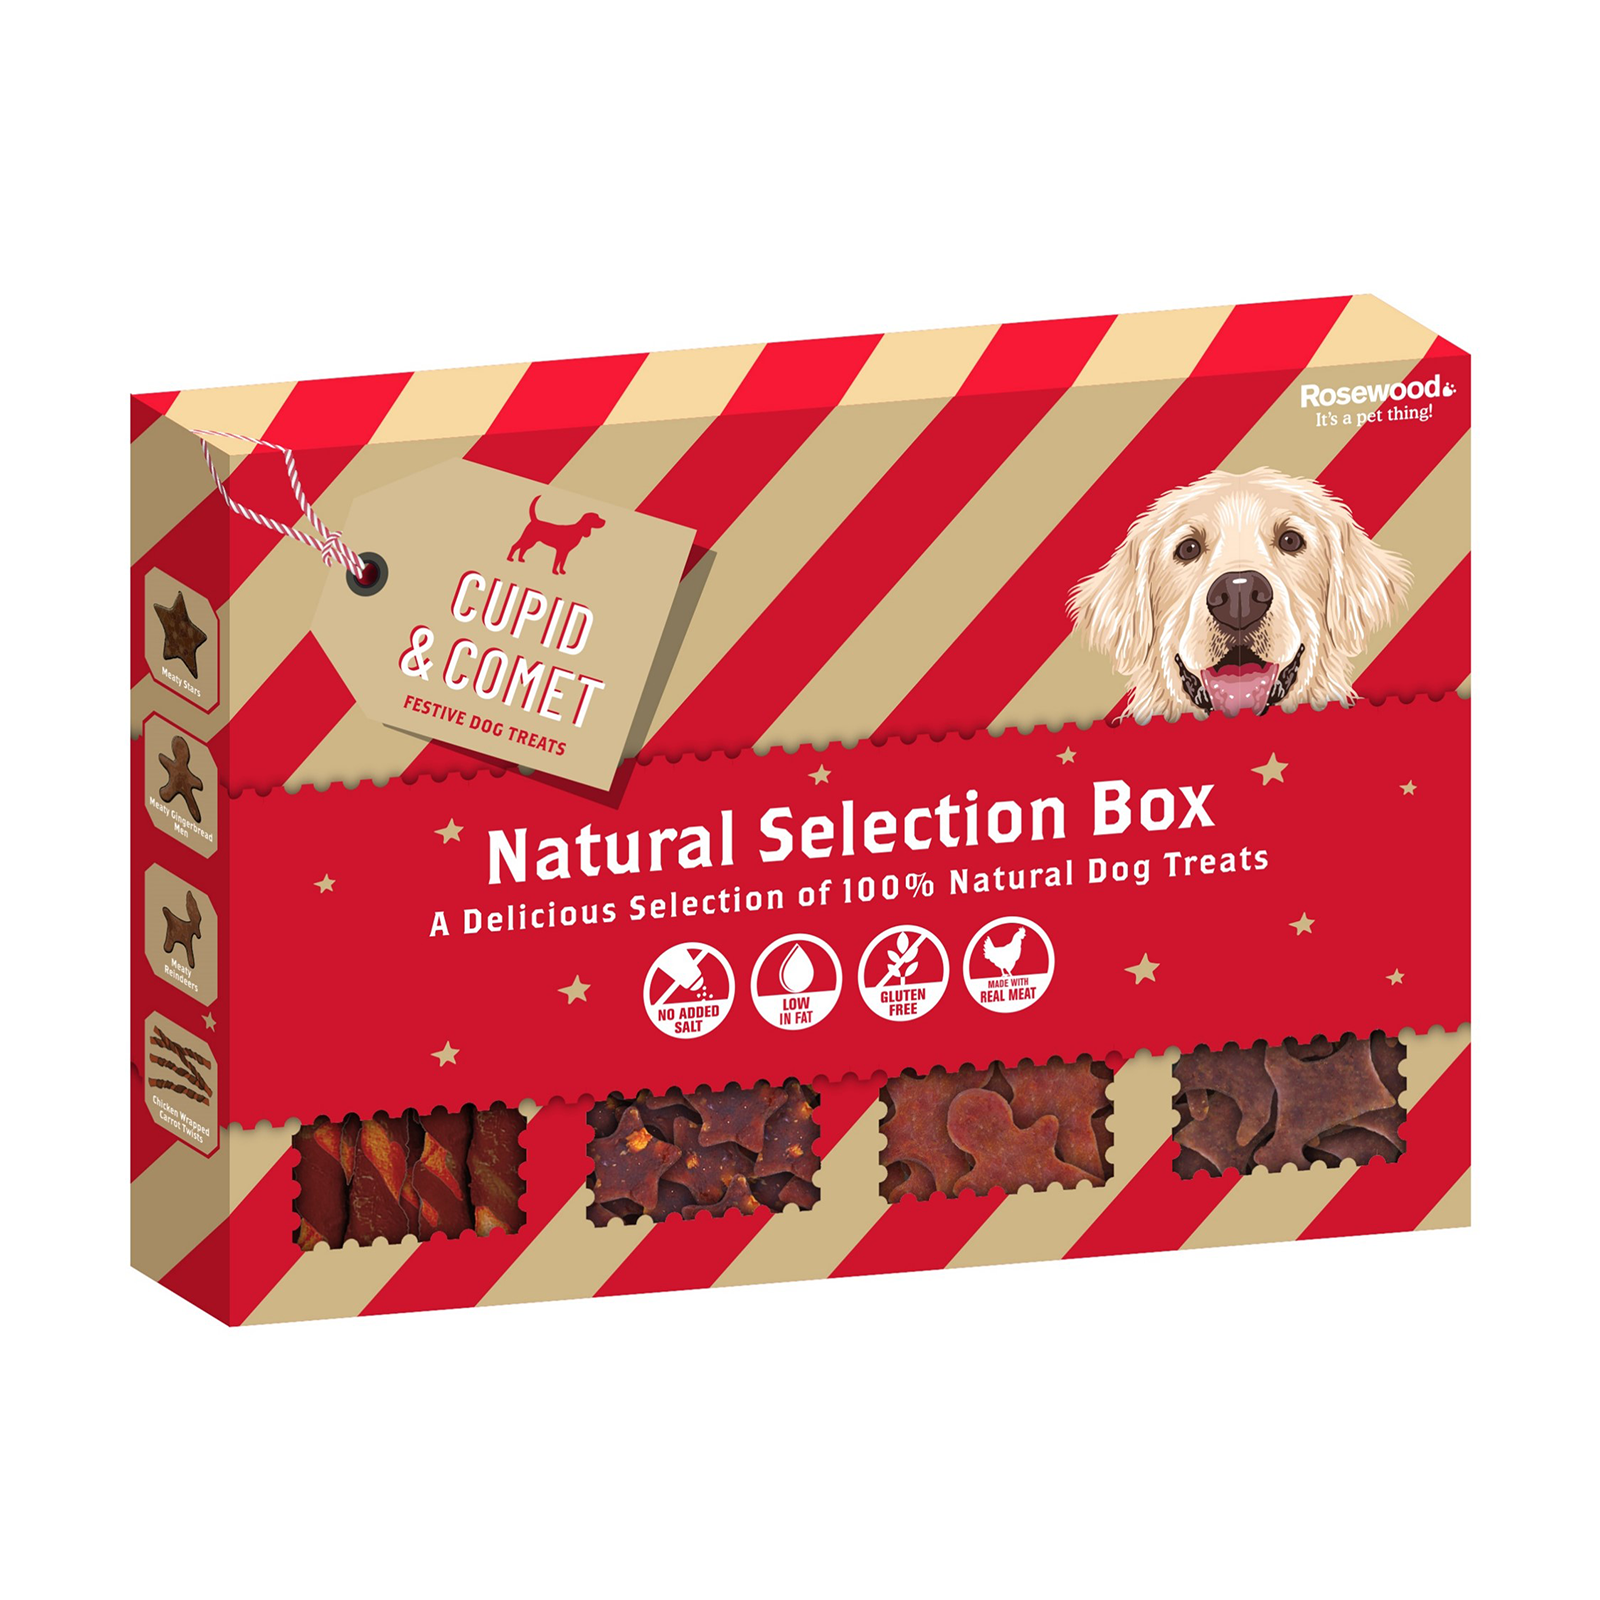 Cupid & Comet Xmas Dog Treat Meaty Selection Gift Box